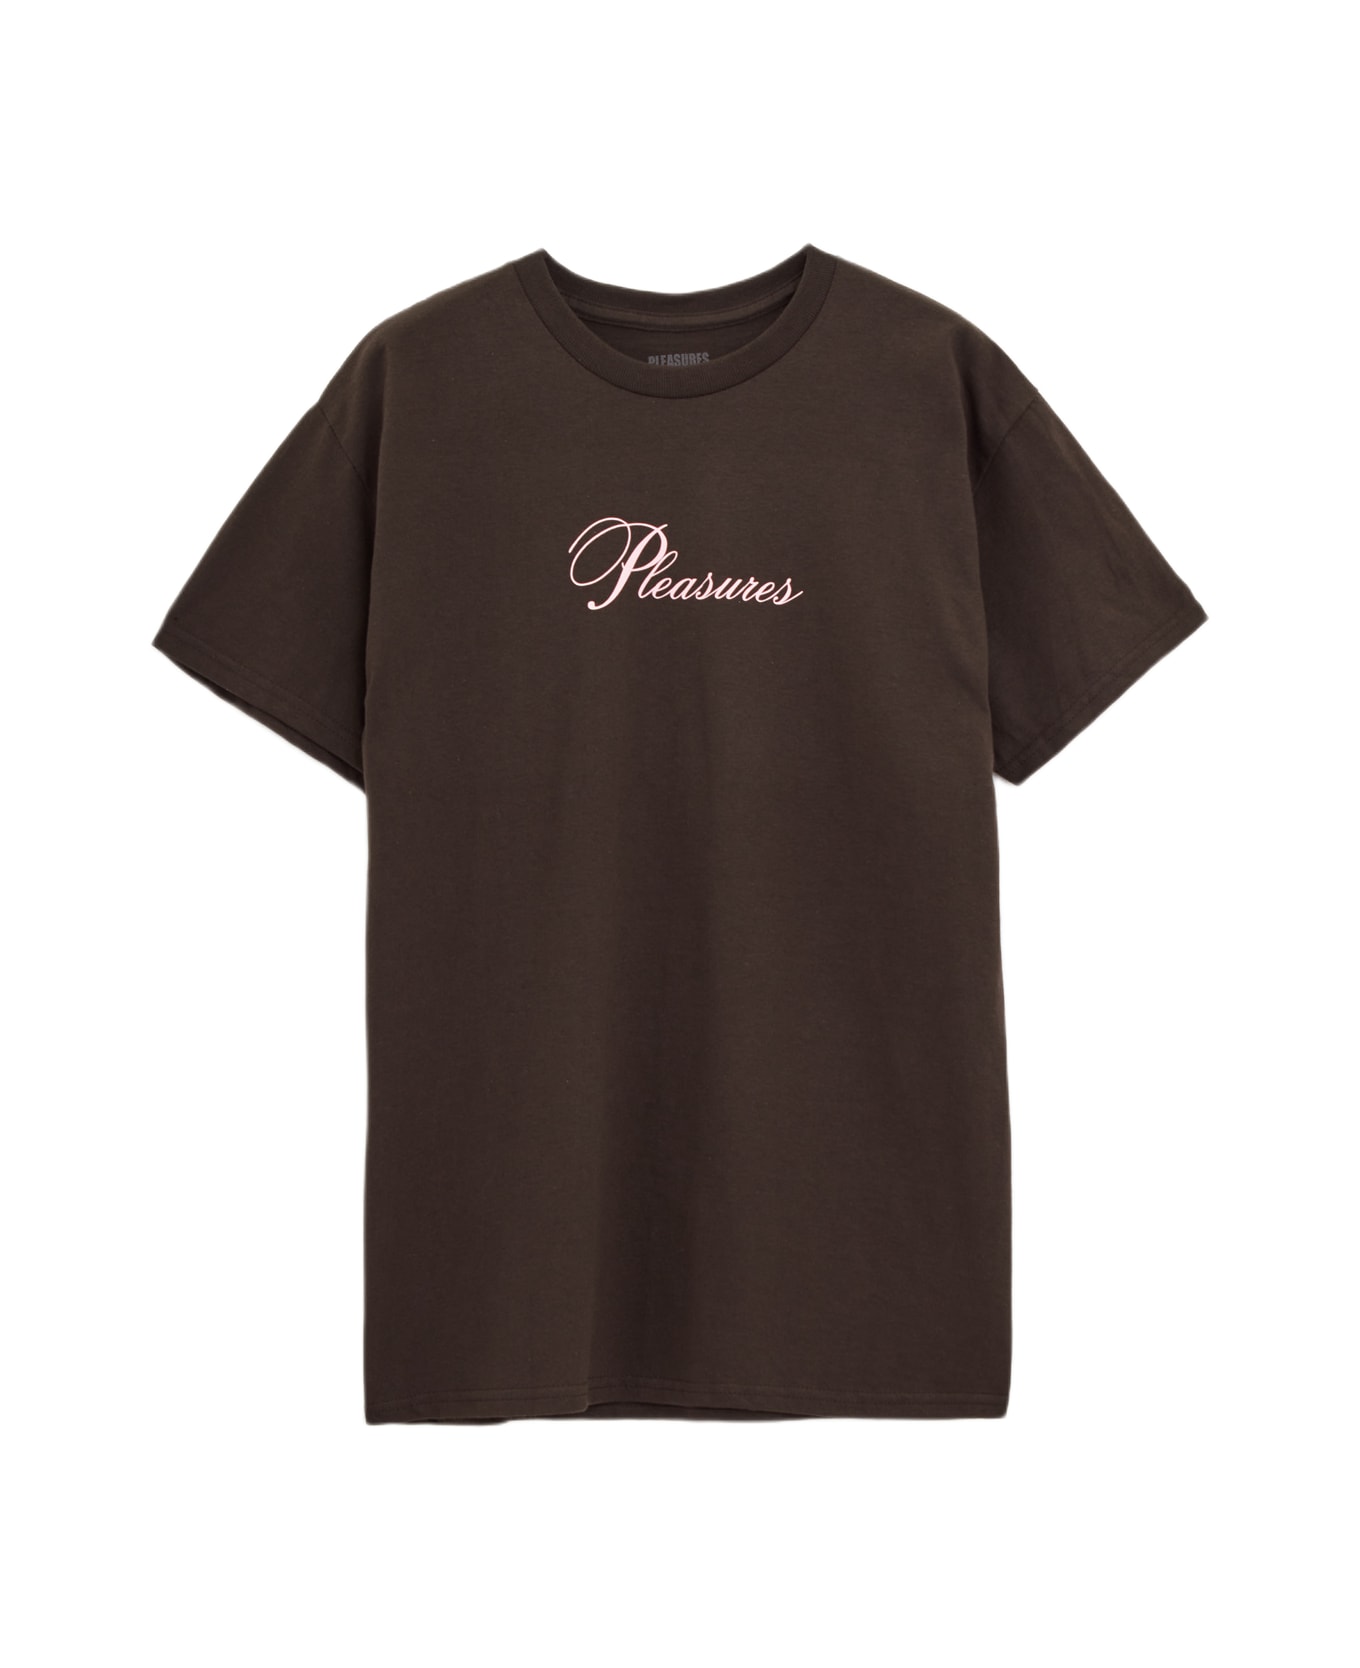 Pleasures Stack T-shirt - brown